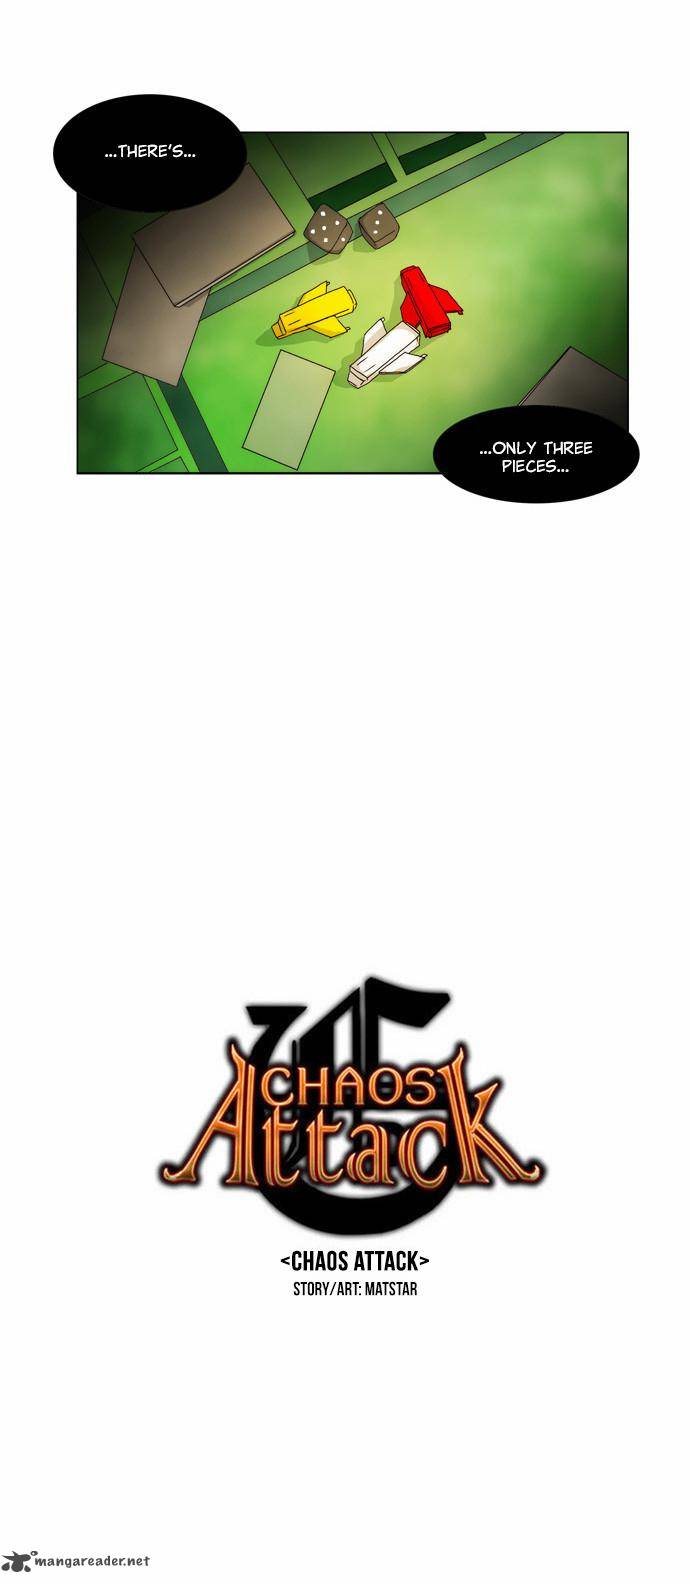 Chaos Attack 24 7